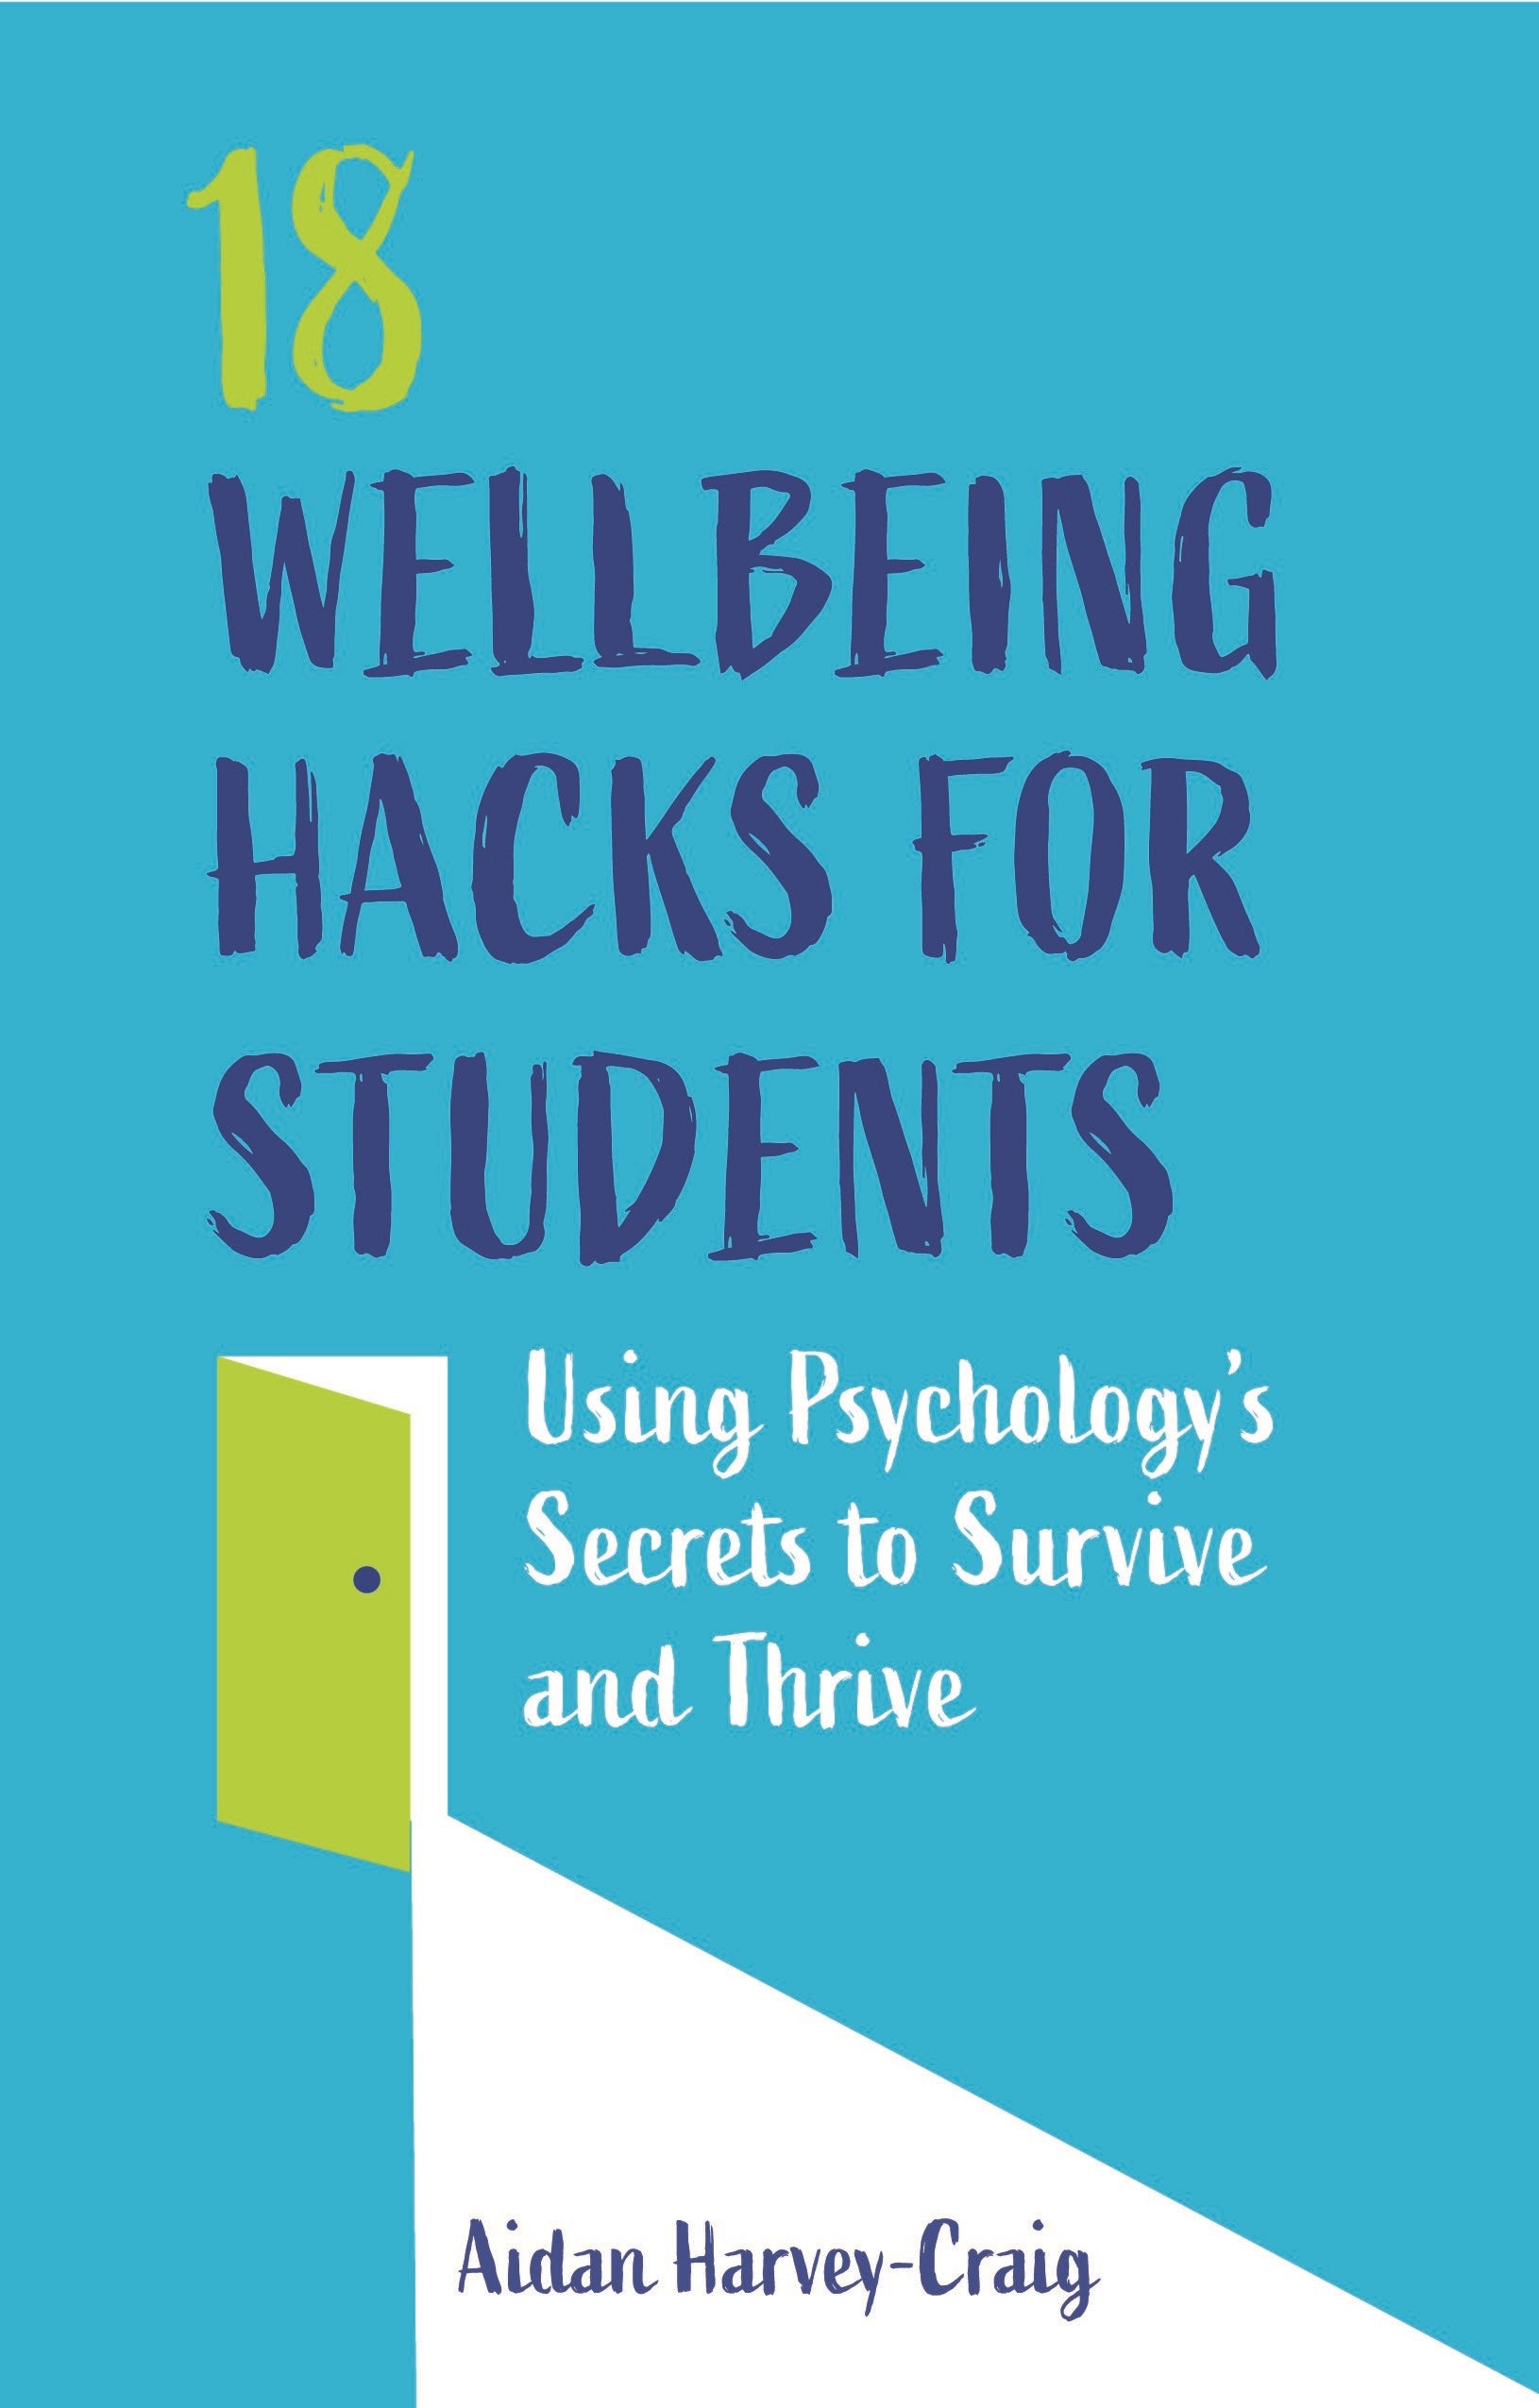 18 Wellbeing Hacks for Students by Aidan Harvey-Craig